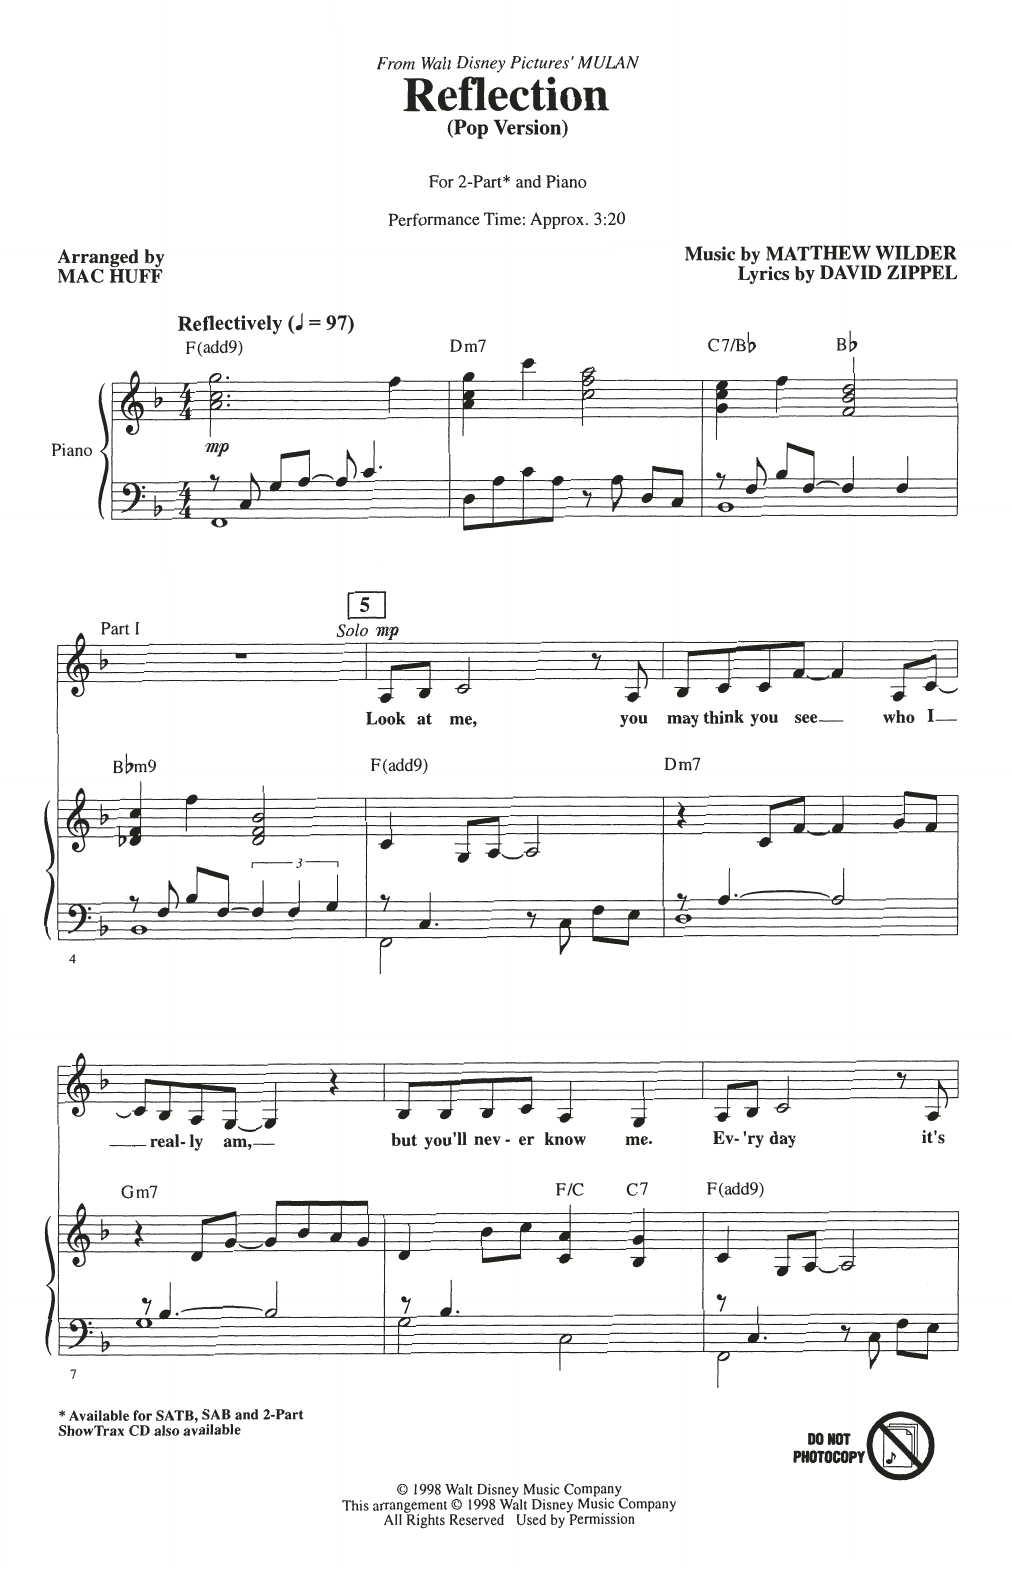 Christina Aguilera Reflection (Pop Version) (from Mulan) (arr. Mac Huff) Sheet Music Notes & Chords for SATB Choir - Download or Print PDF